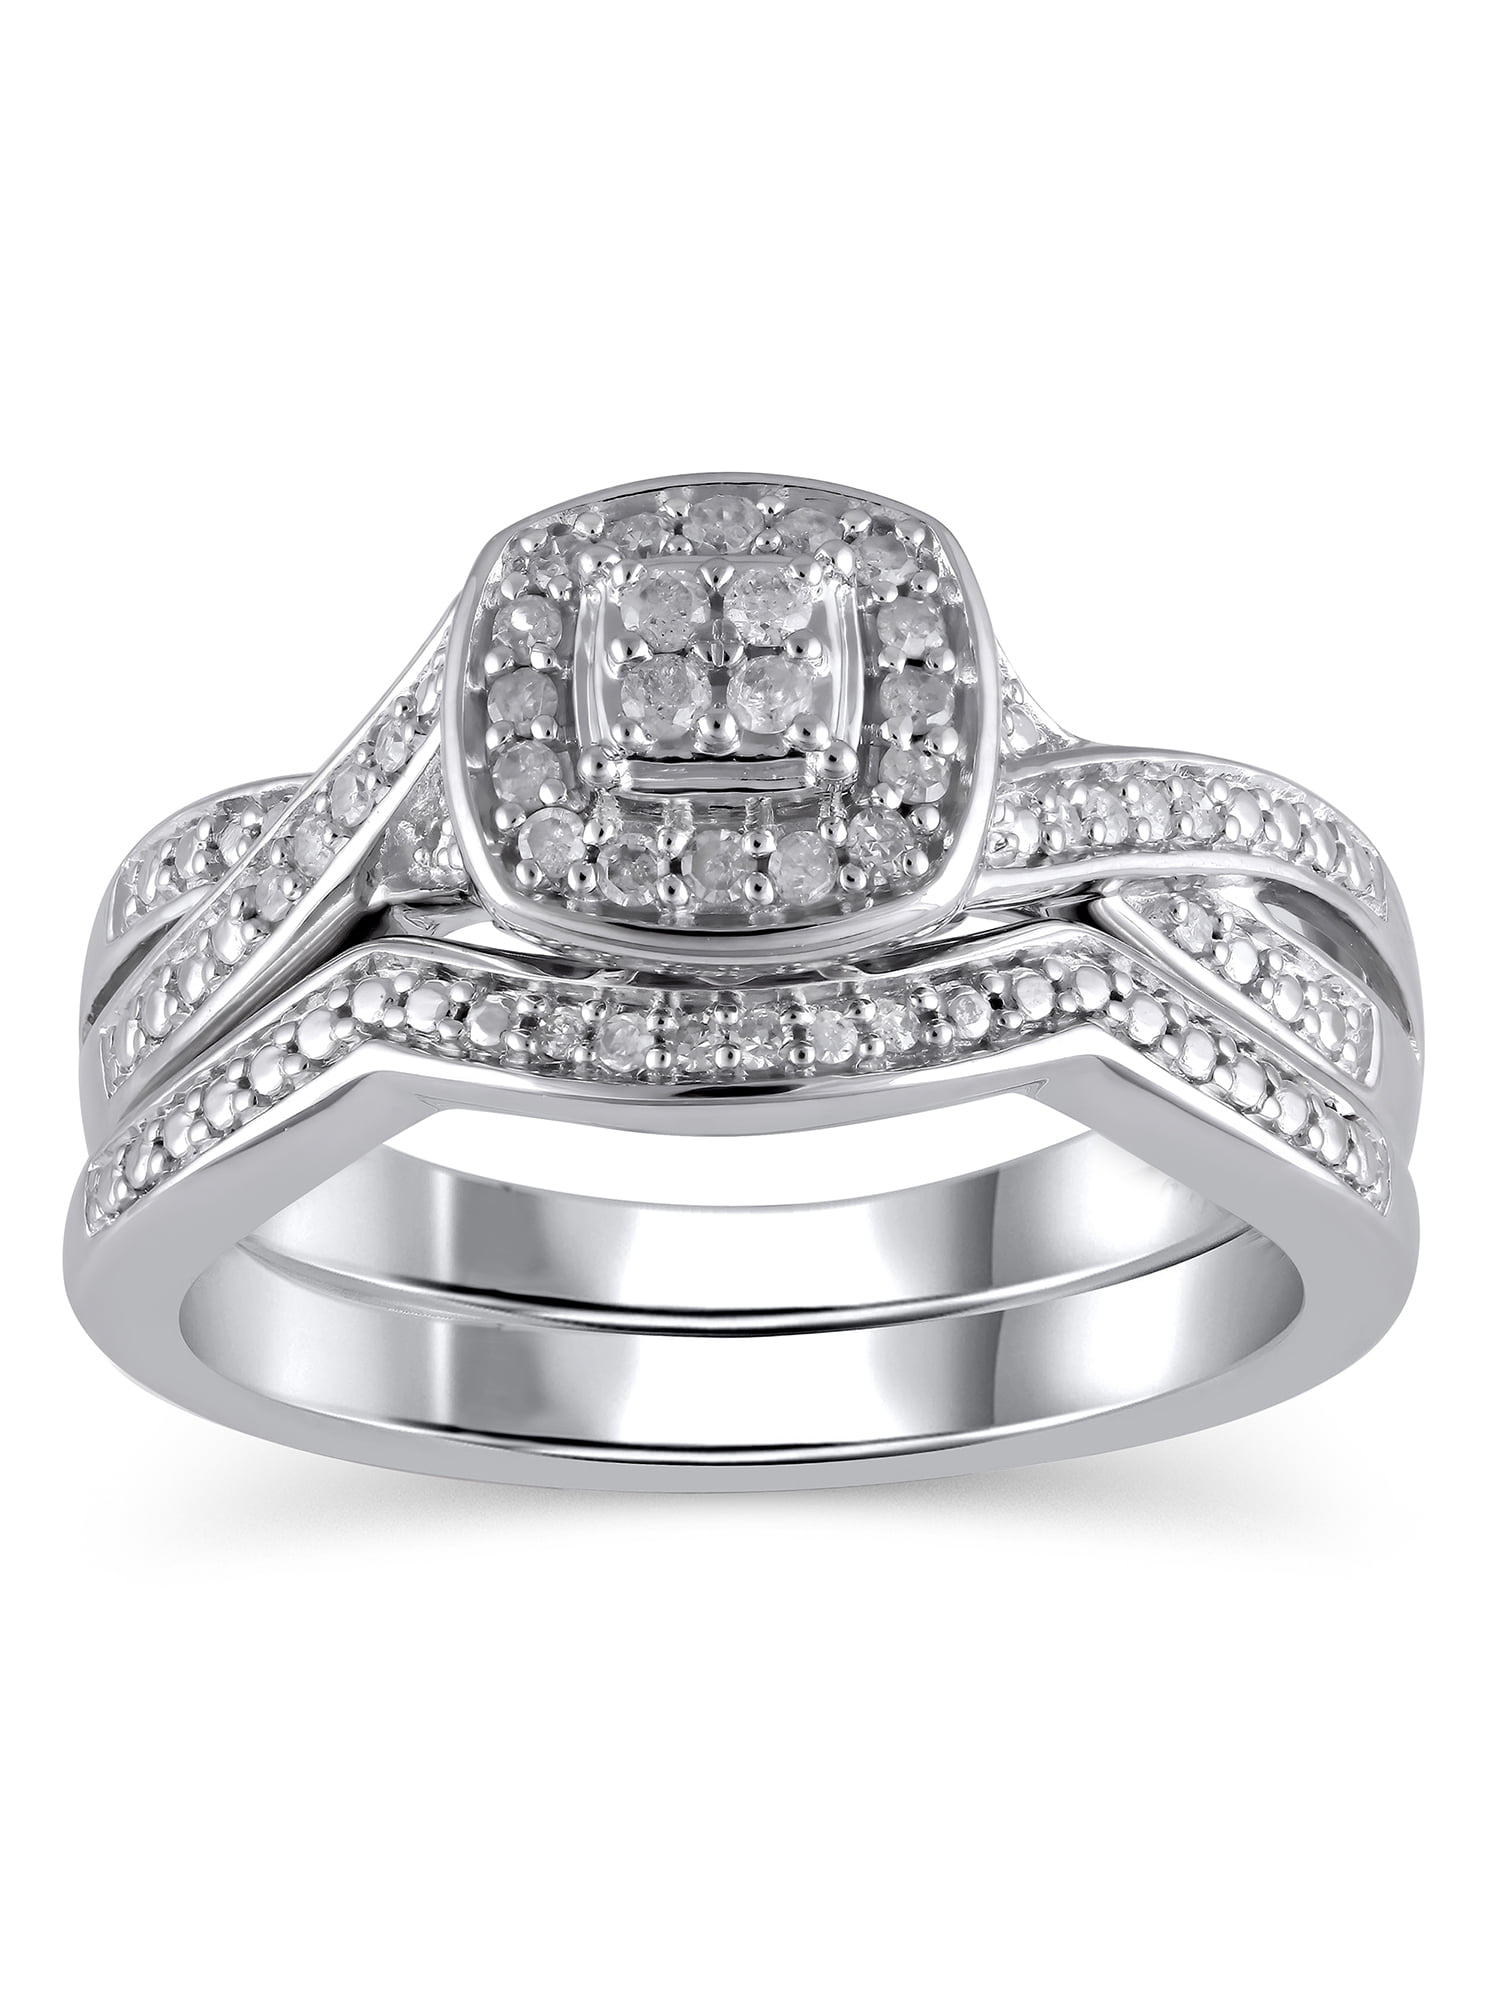 10ct White Cushion Diamond Halo Engagement Wedding Ring Set 925 Sterling Silver 